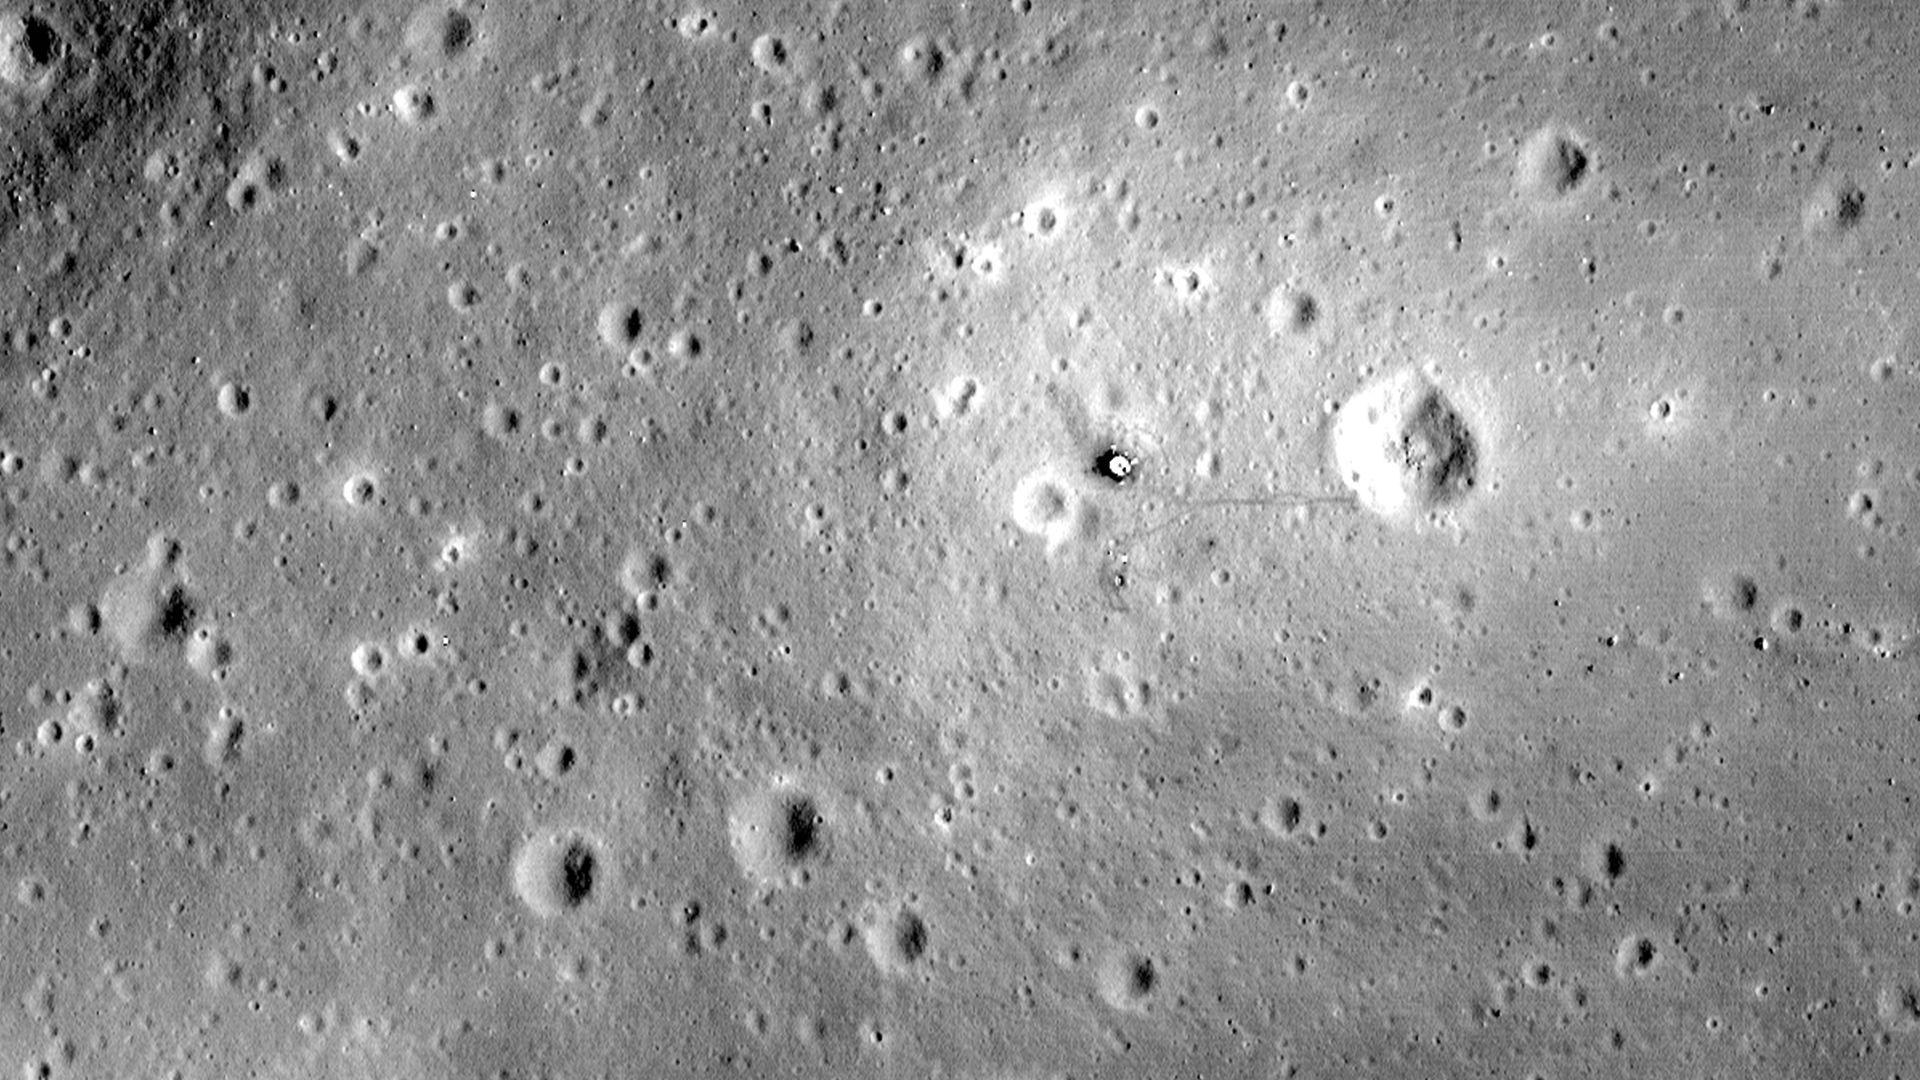 The Apollo 11 landing site from lunar orbit